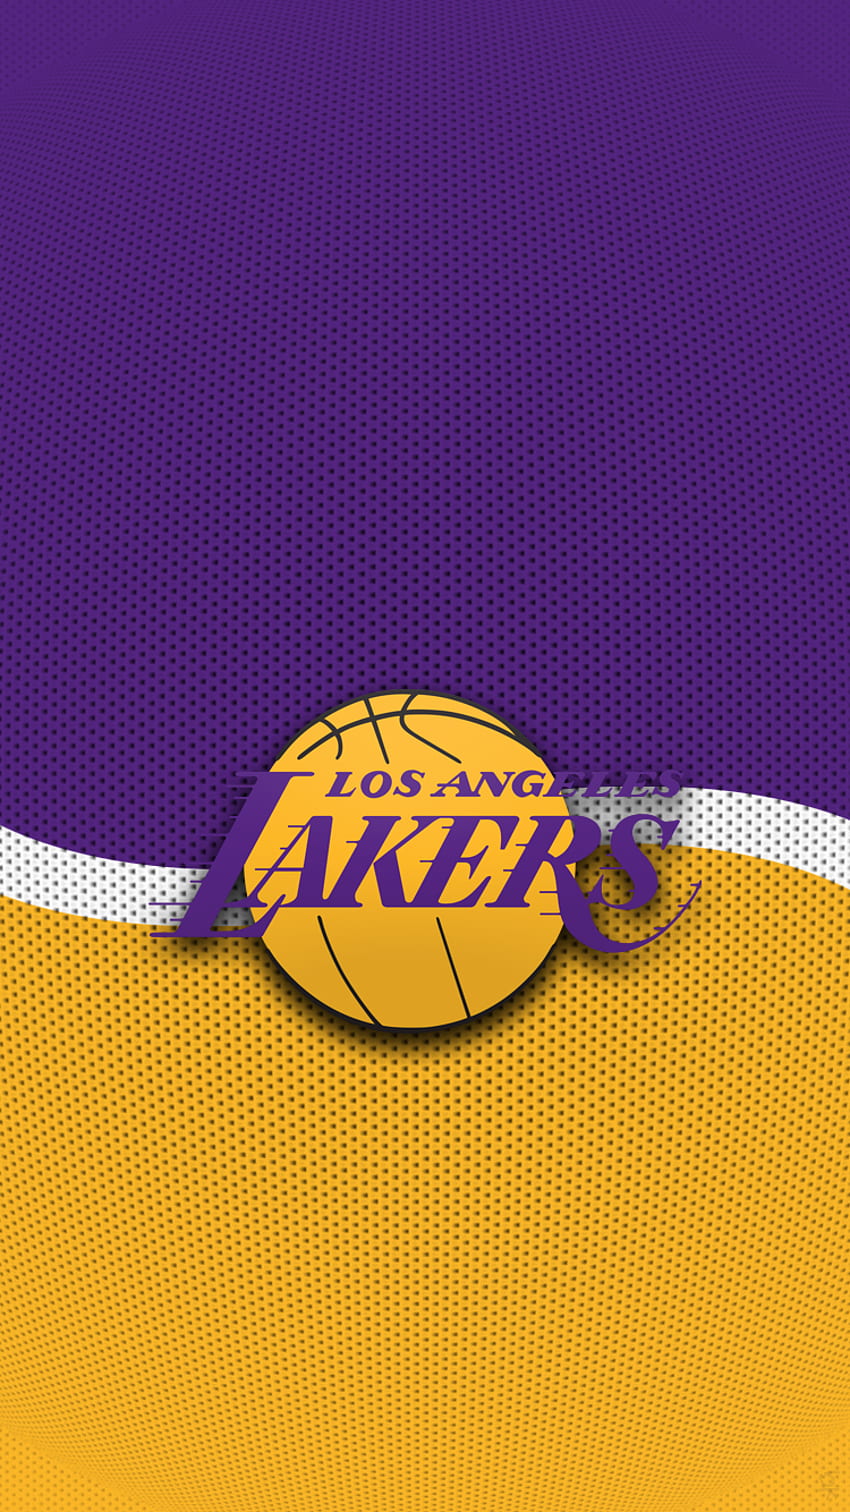 Los Angeles Lakers Live, LA Lakers iPhone HD phone wallpaper